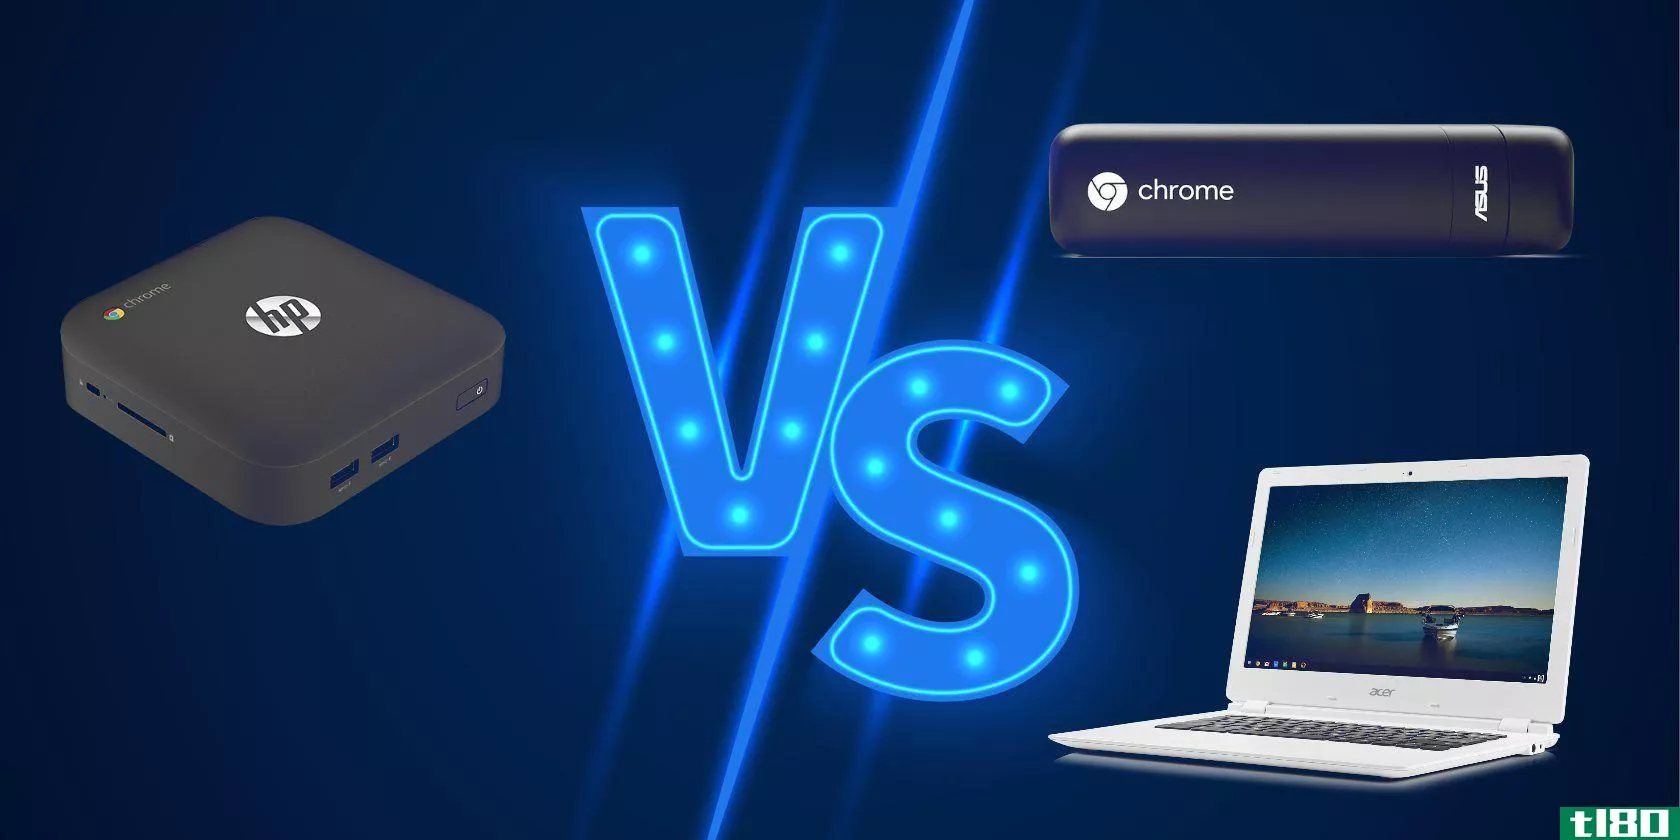 chrome-device-comparison-featured